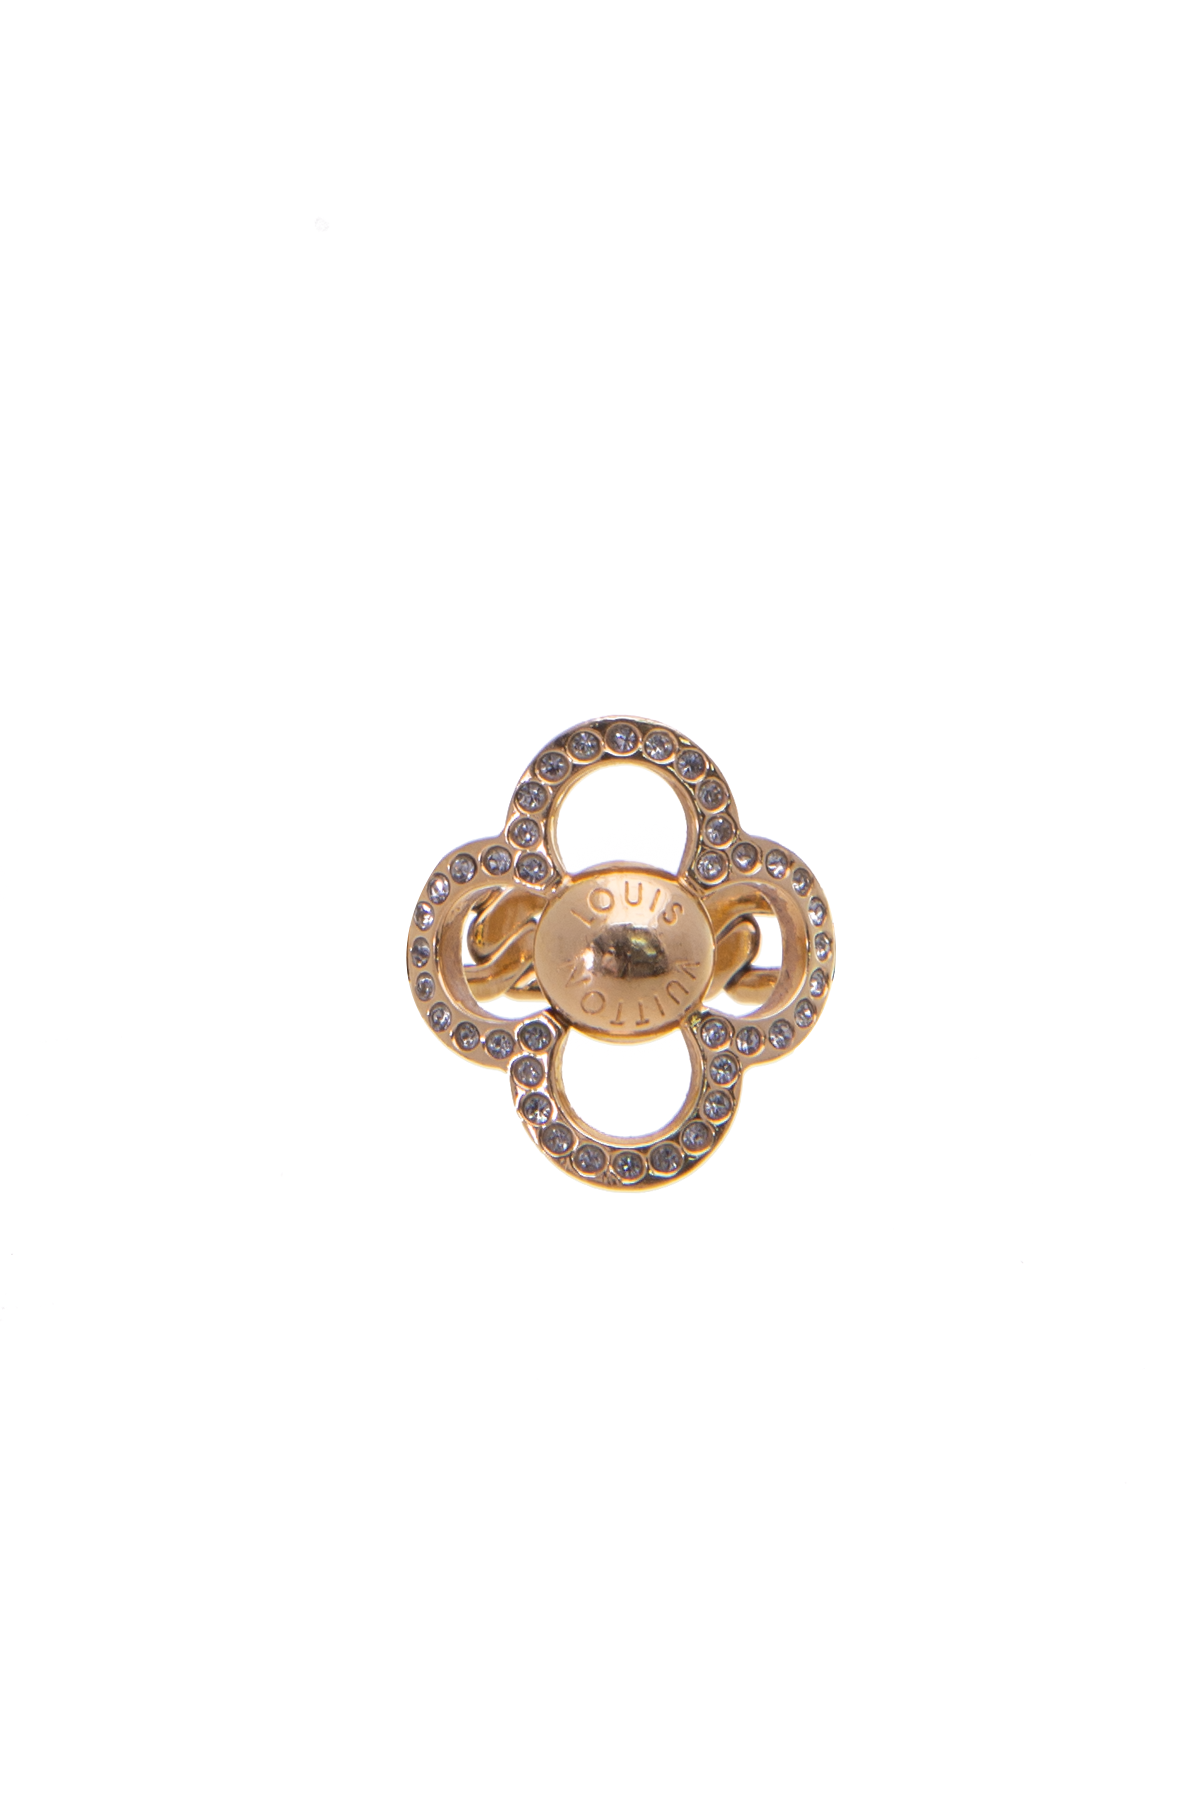 Louis Vuitton Flower Full Ring